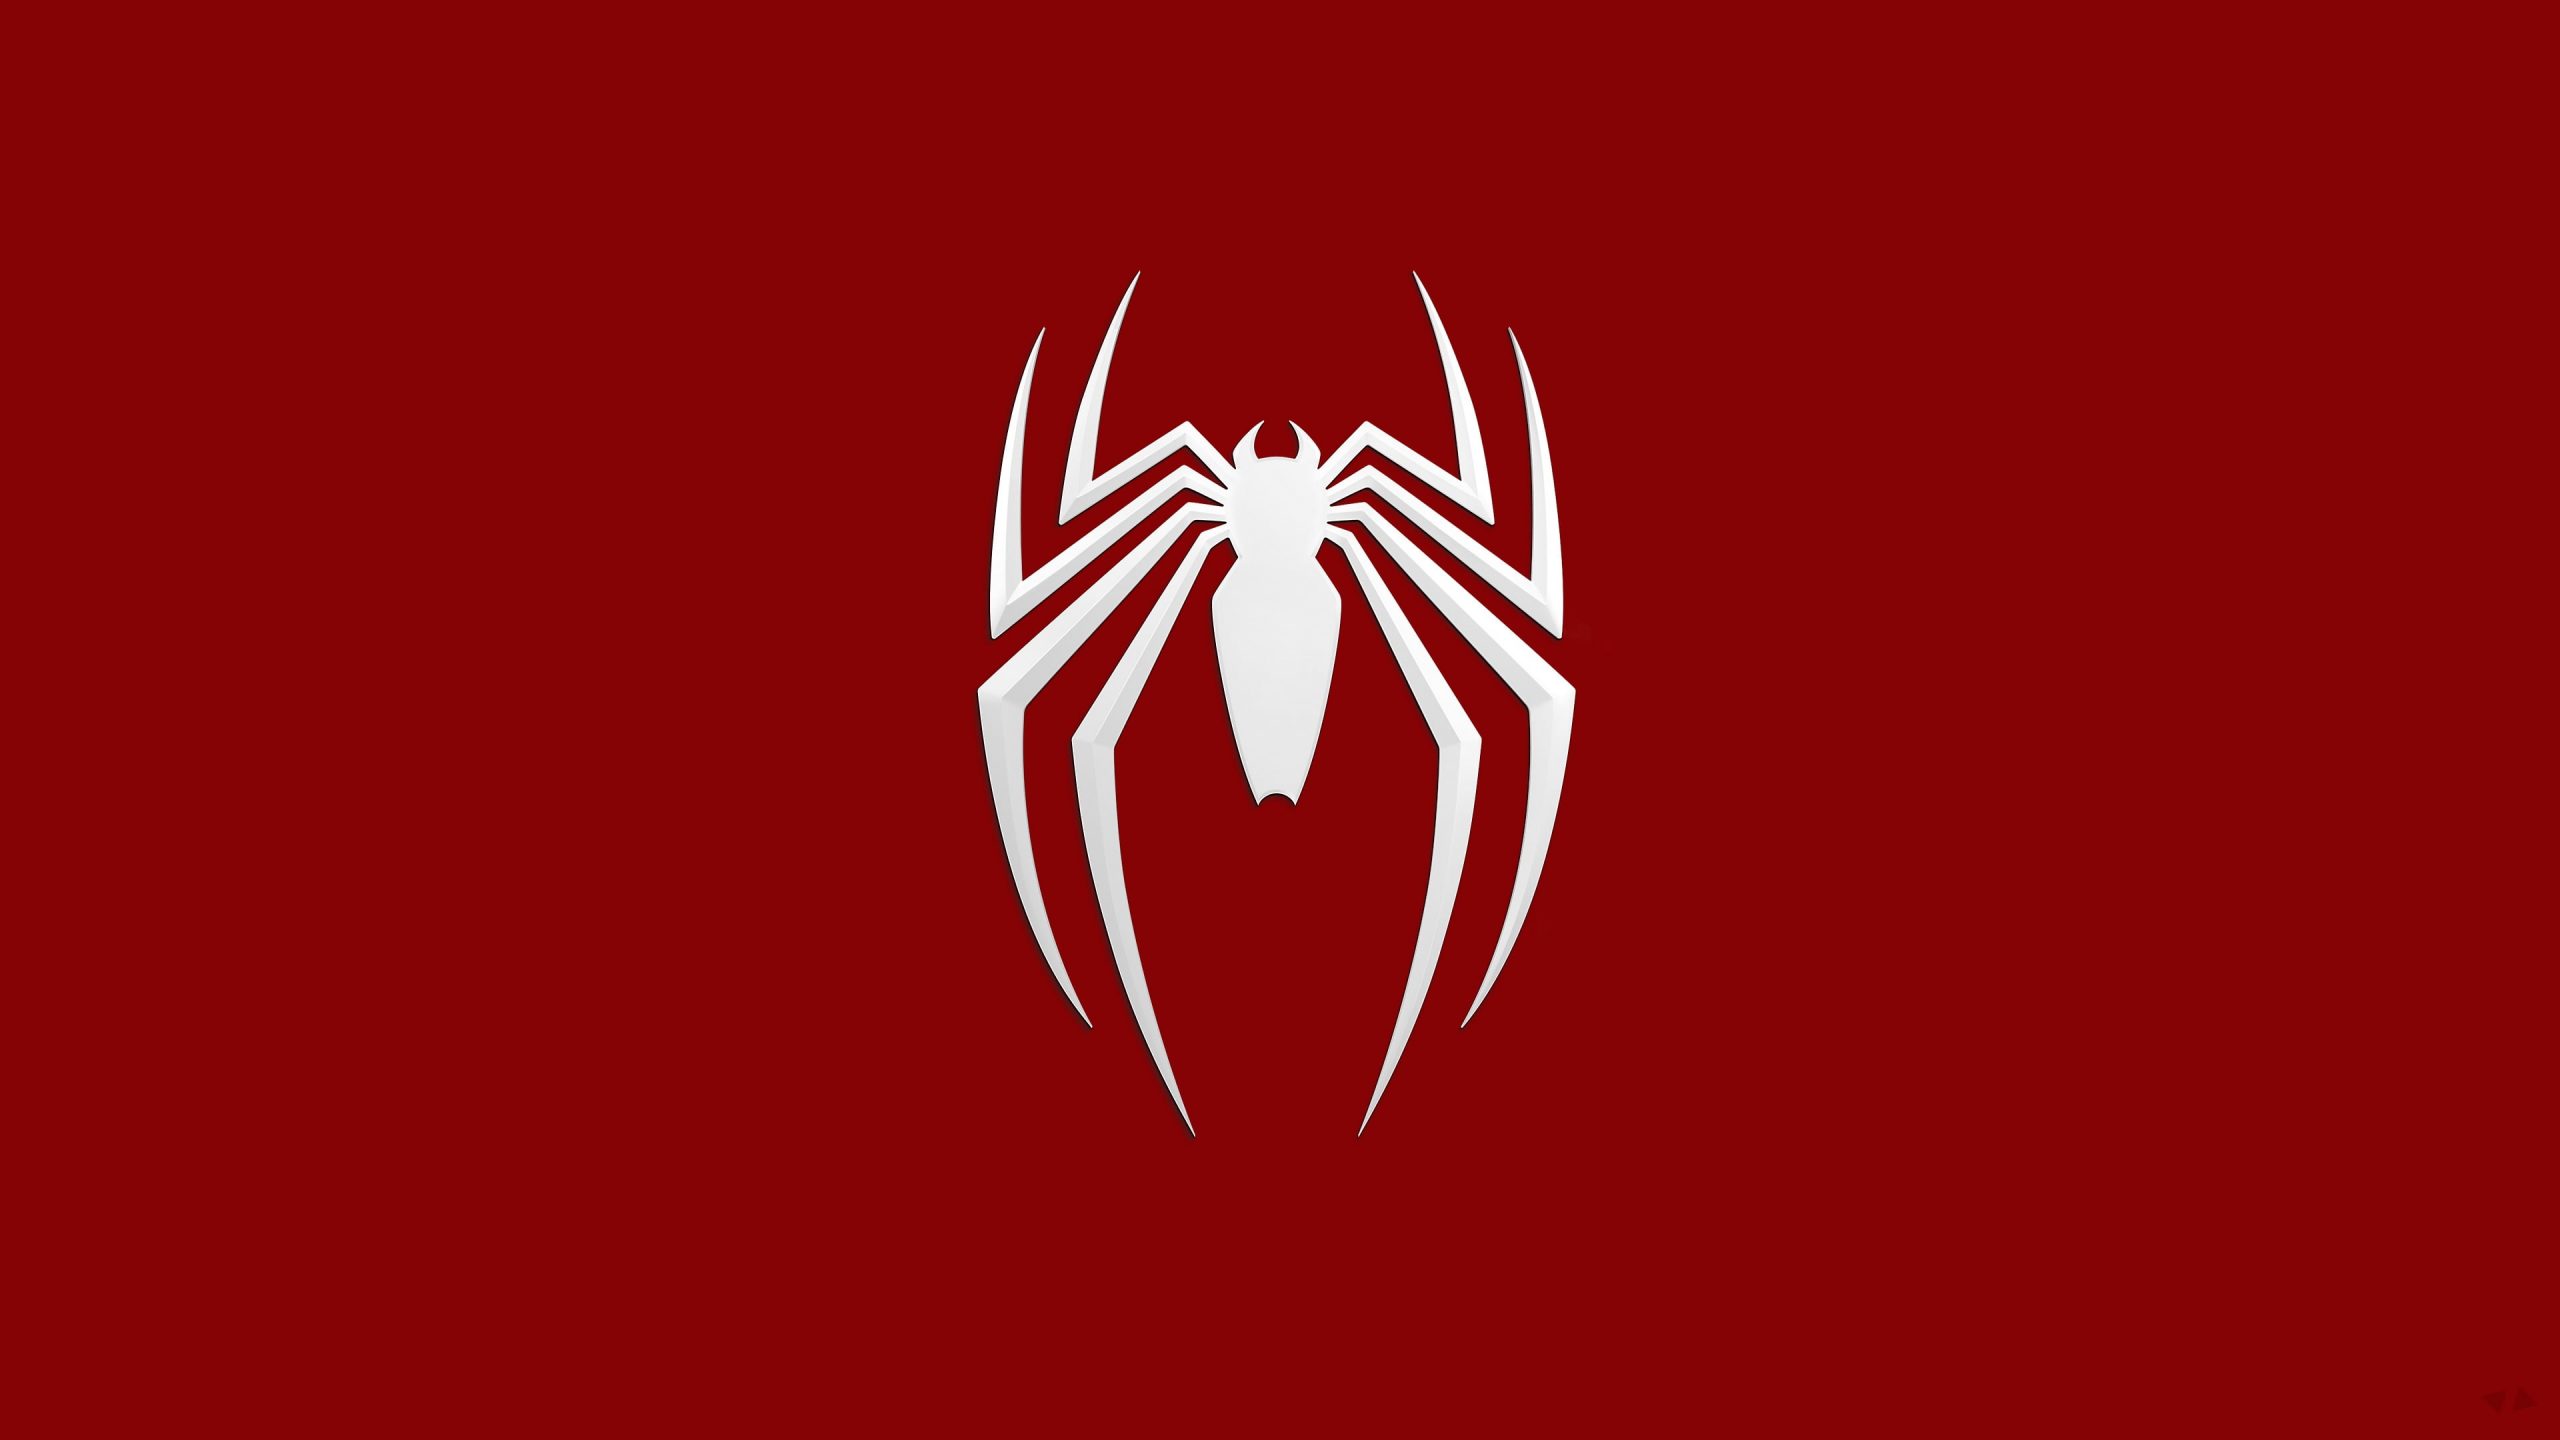 Marvel Spider-Man logo wallpaper, simple background, Spider-Man (2018)